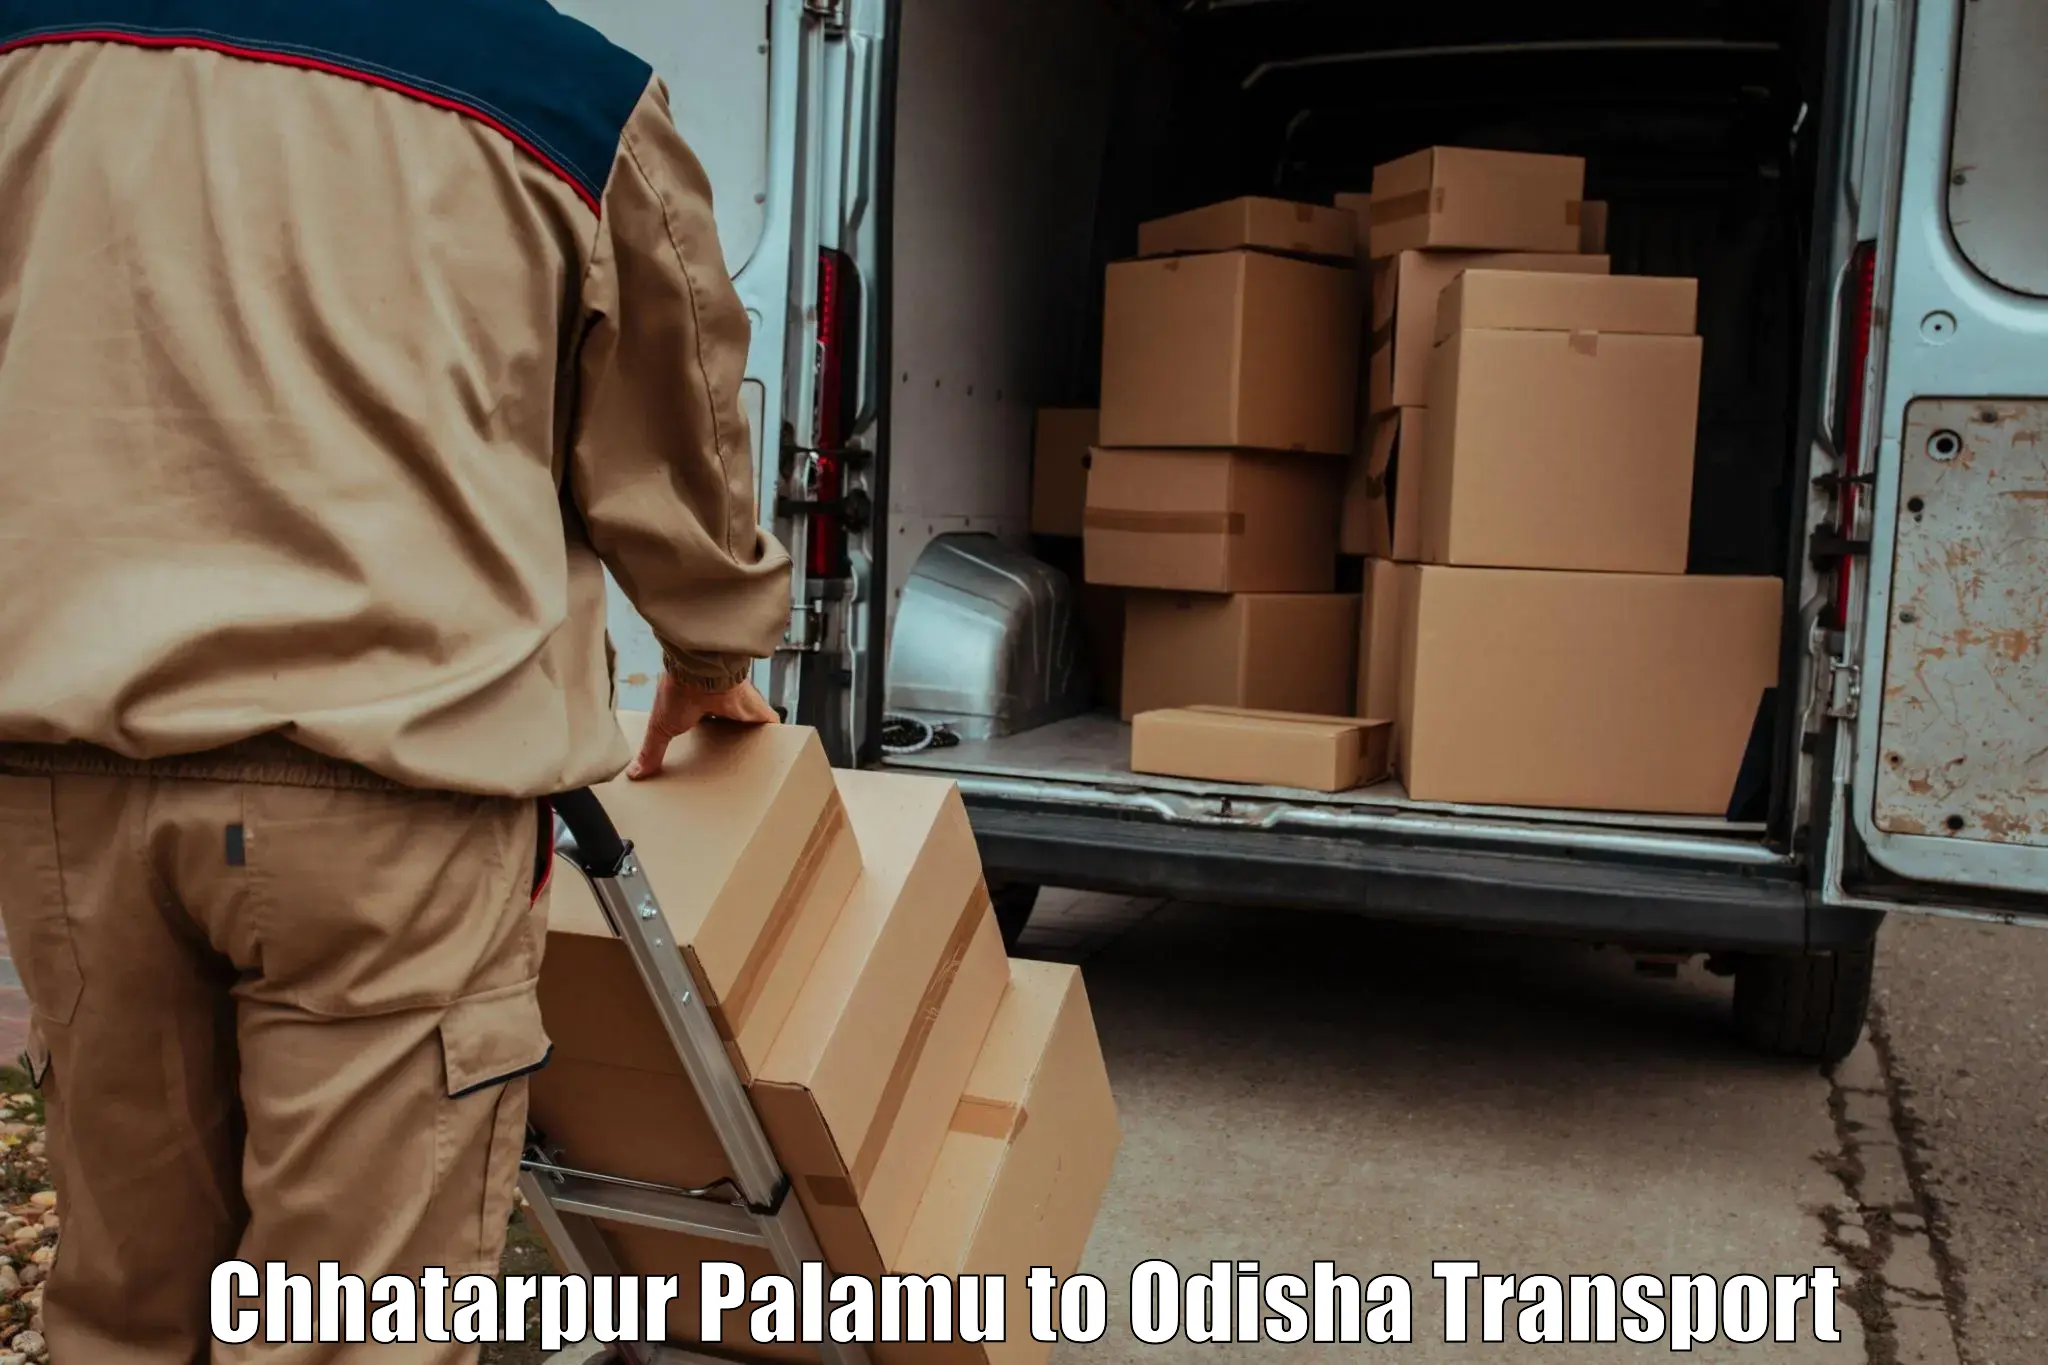 Transport in sharing Chhatarpur Palamu to Dhamanagar